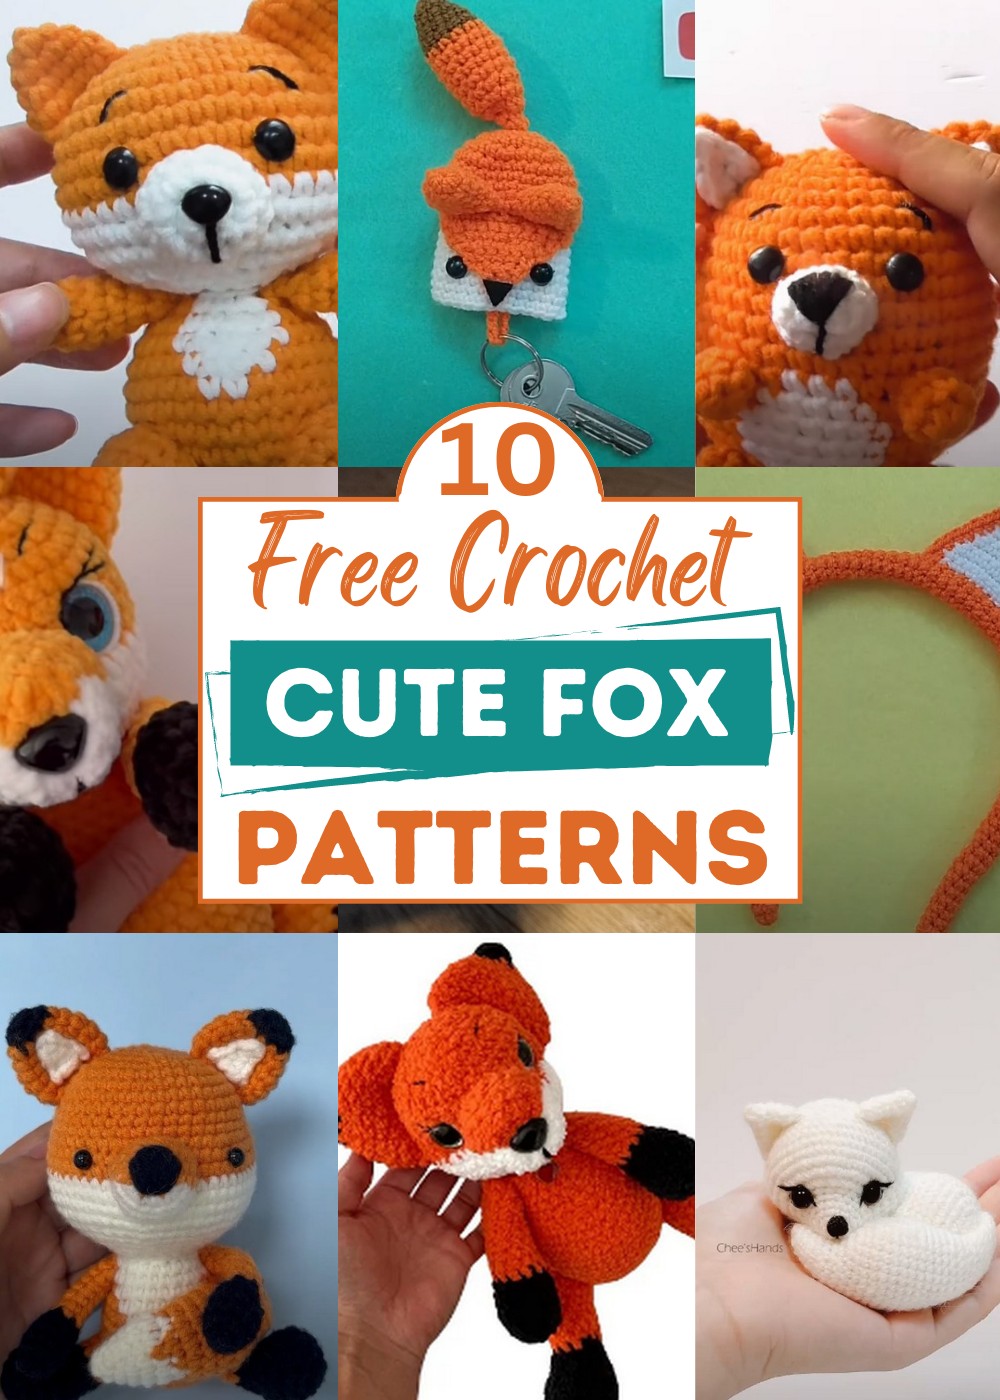 Crochet Fox Patterns